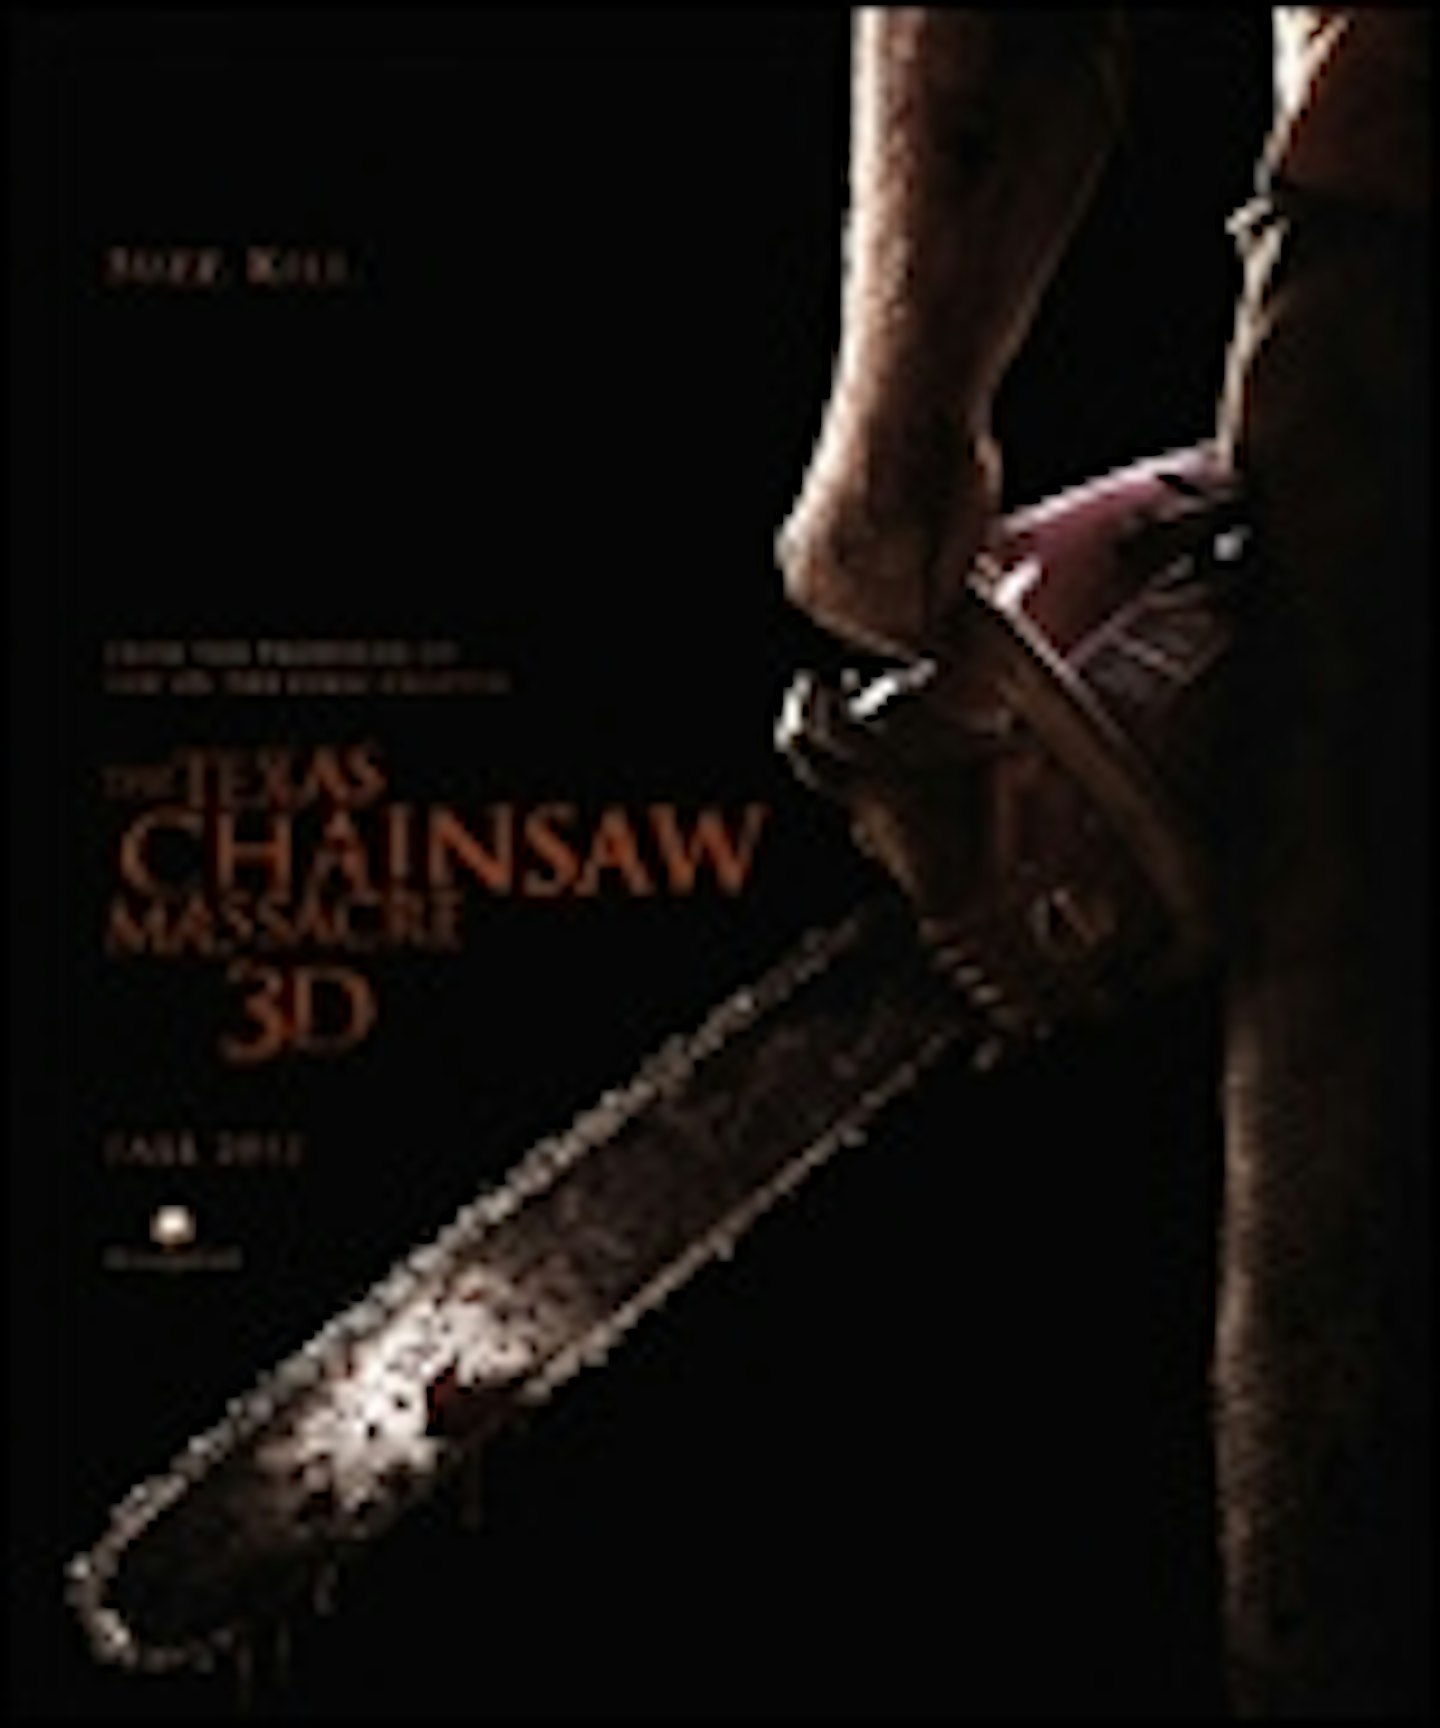 Texas Chainsaw 3D Teaser Poster Arrives